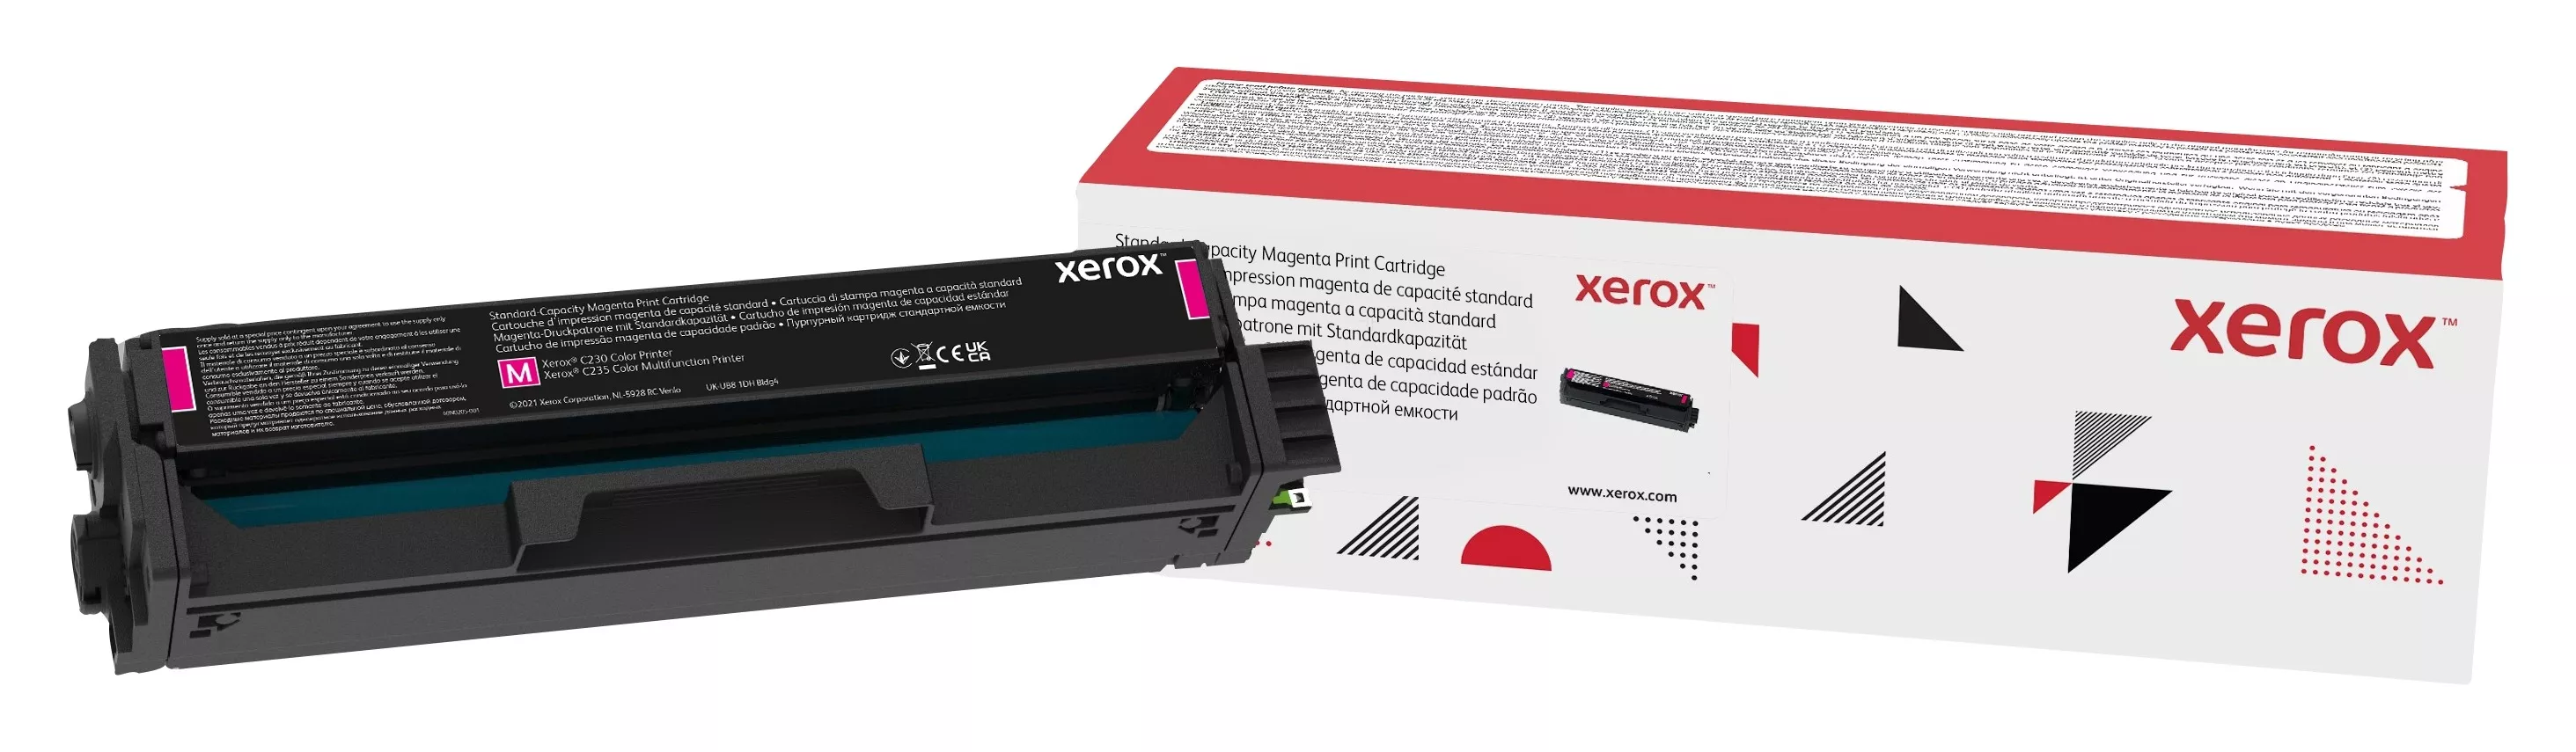 Achat XEROX C230/C235 Magenta Standard Capacity Toner au meilleur prix